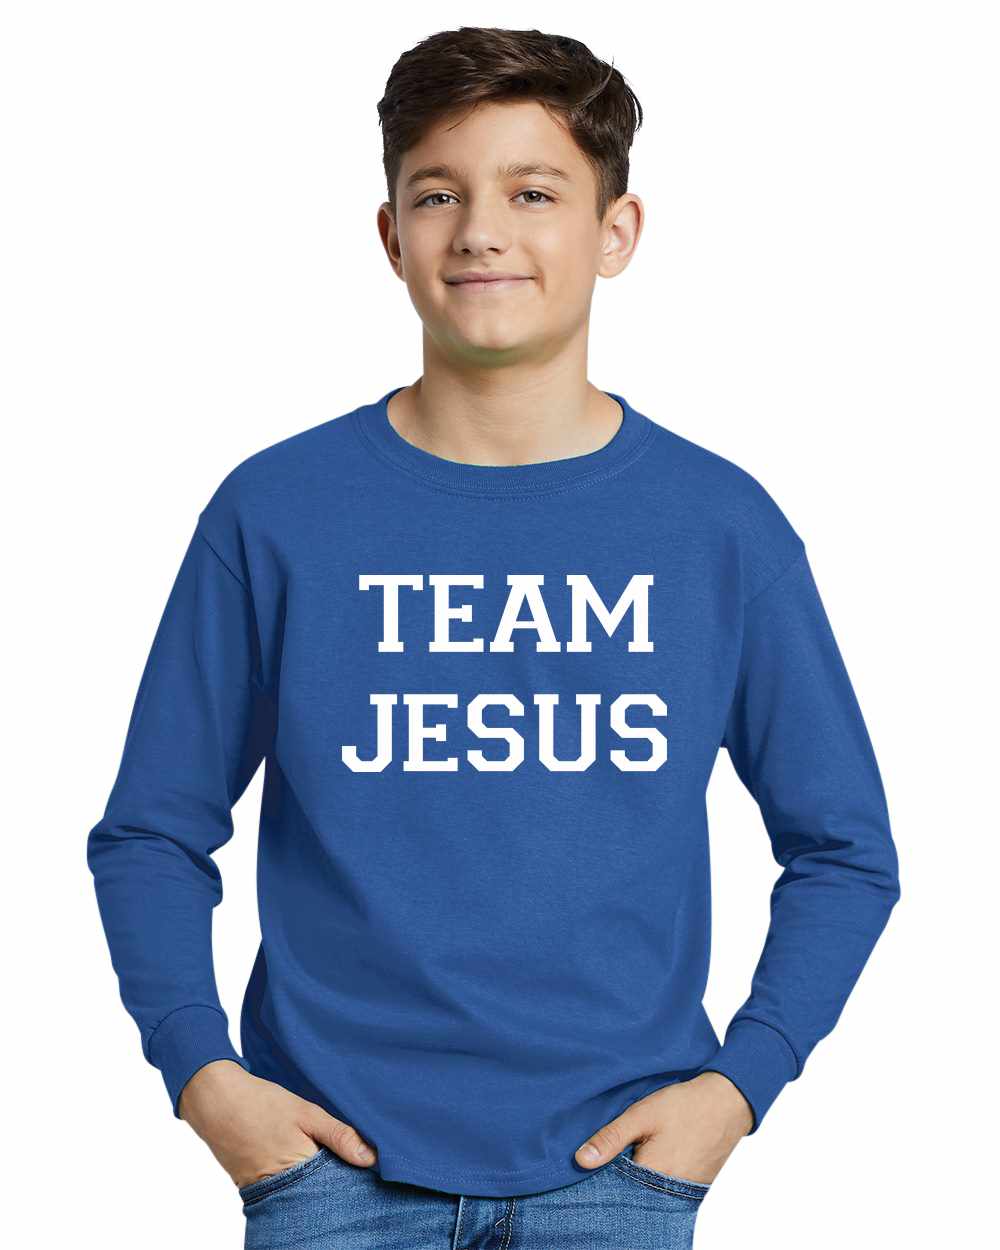 TEAM JESUS on Youth Long Sleeve Shirt (#589-203)